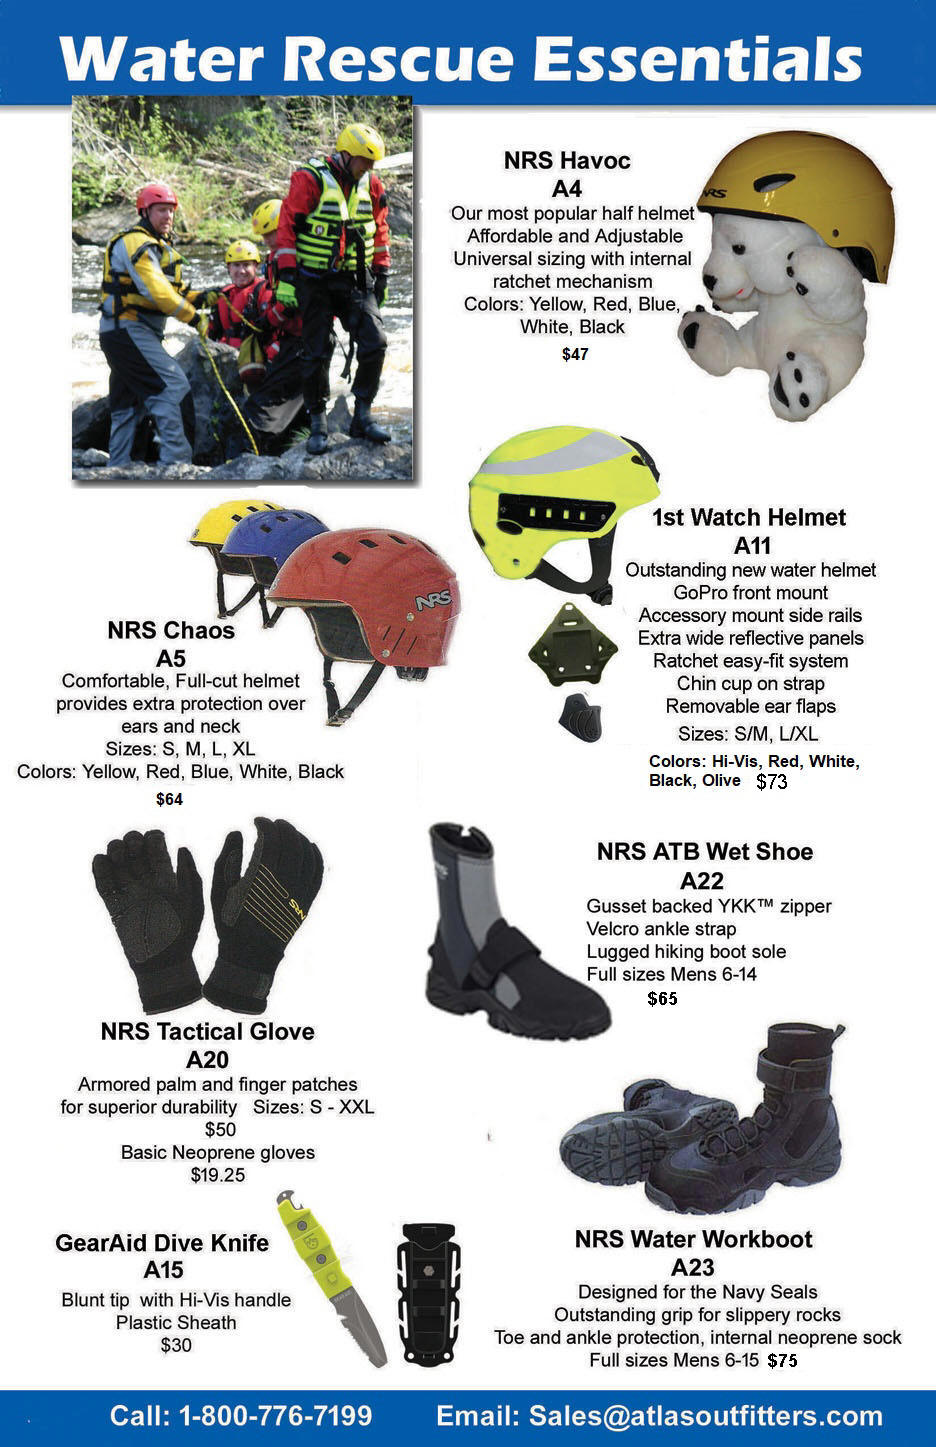 Water rescue helmets, knives, neoprene gloves